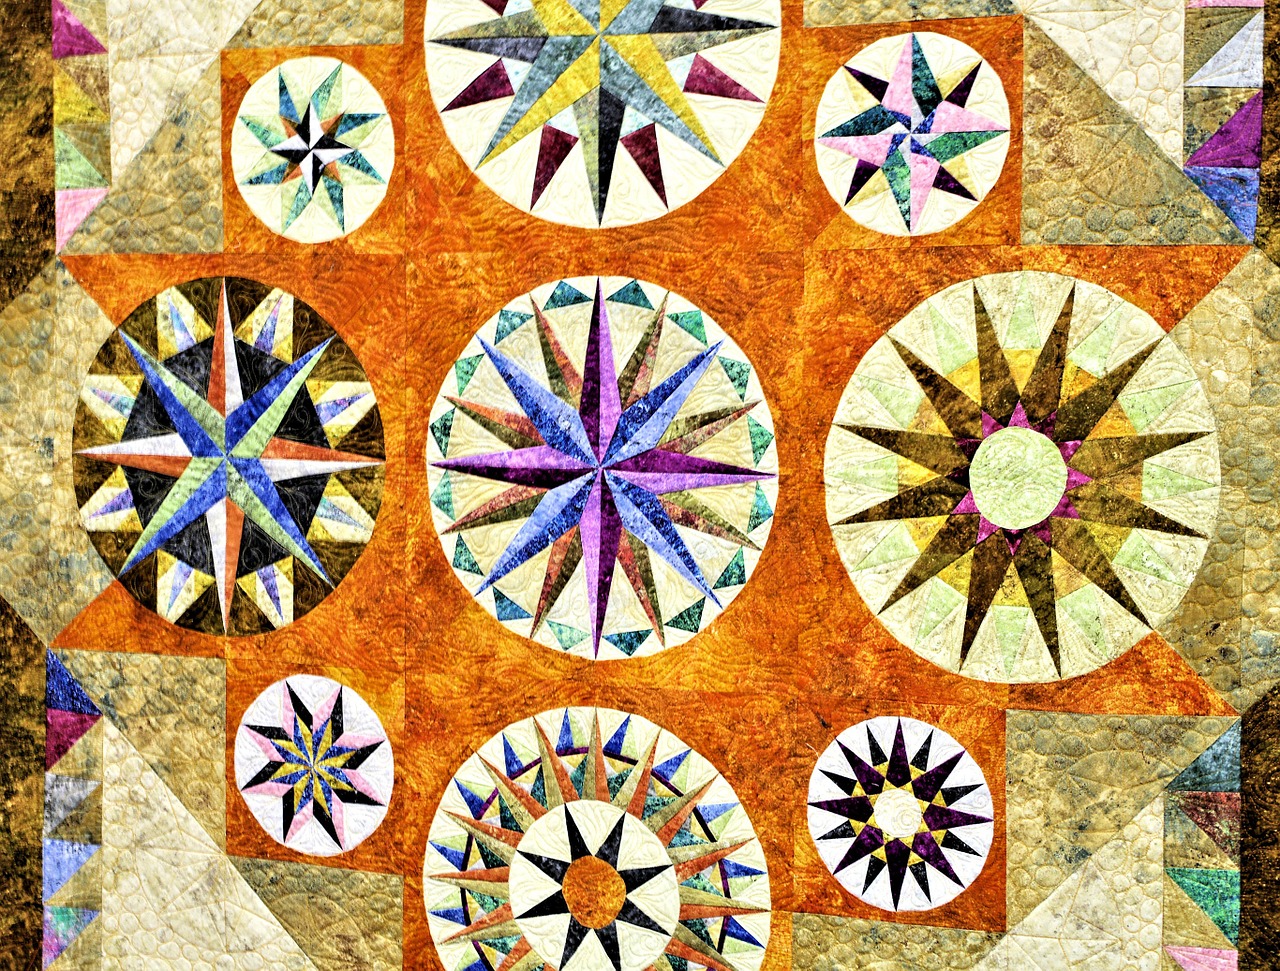 prize winning quilt circular star designs sewing free photo